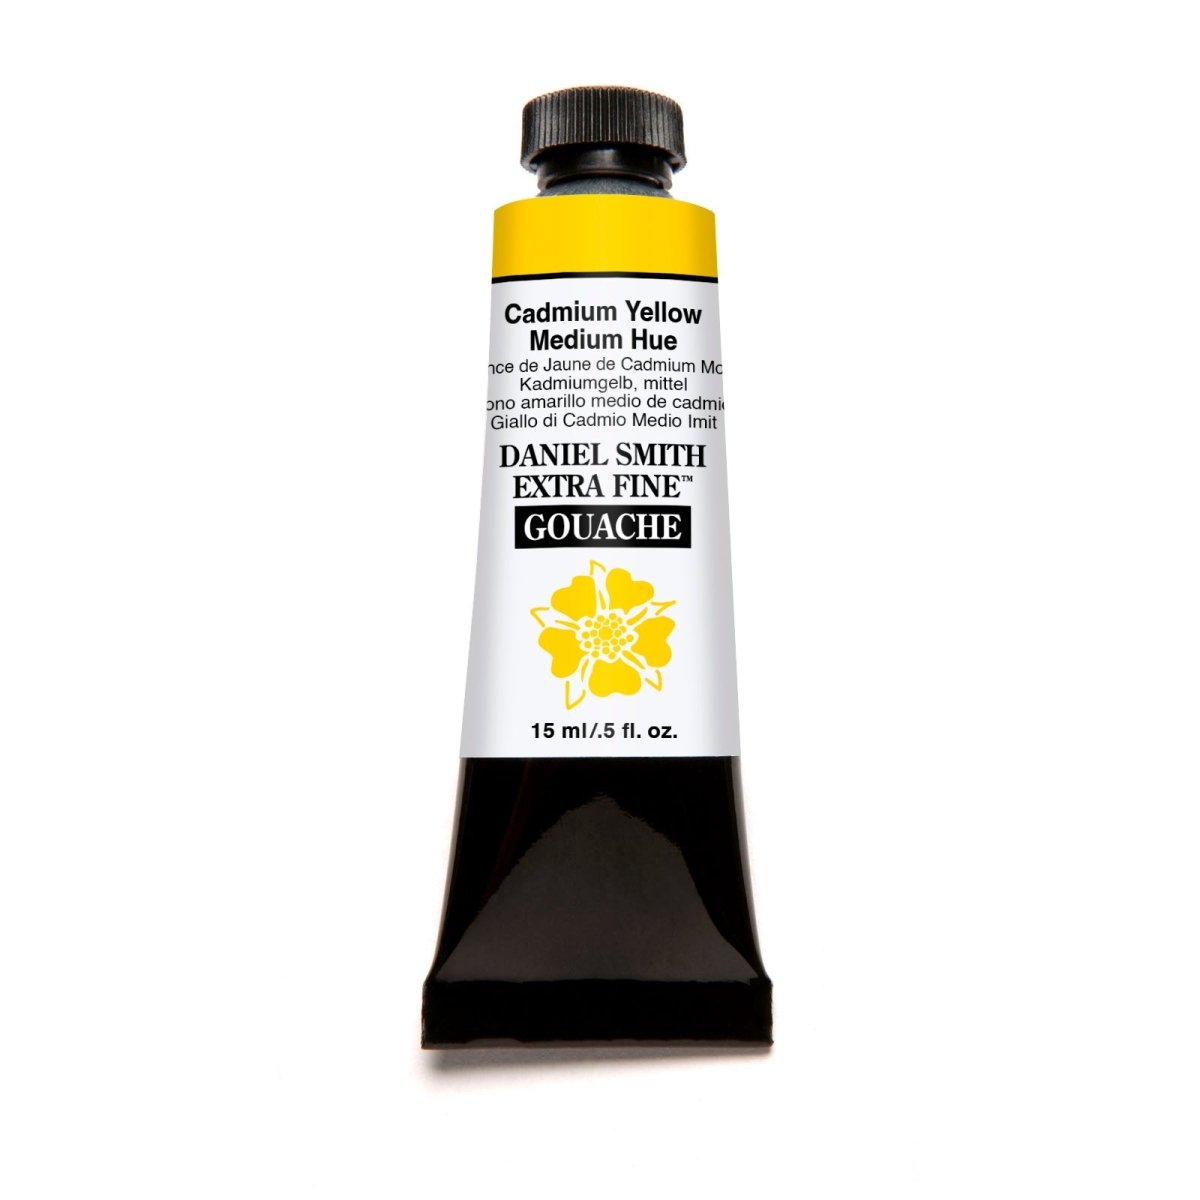 Daniel Smith Extra Fine Gouache 15 ml - Cadmium Yellow Medium Hue - merriartist.com